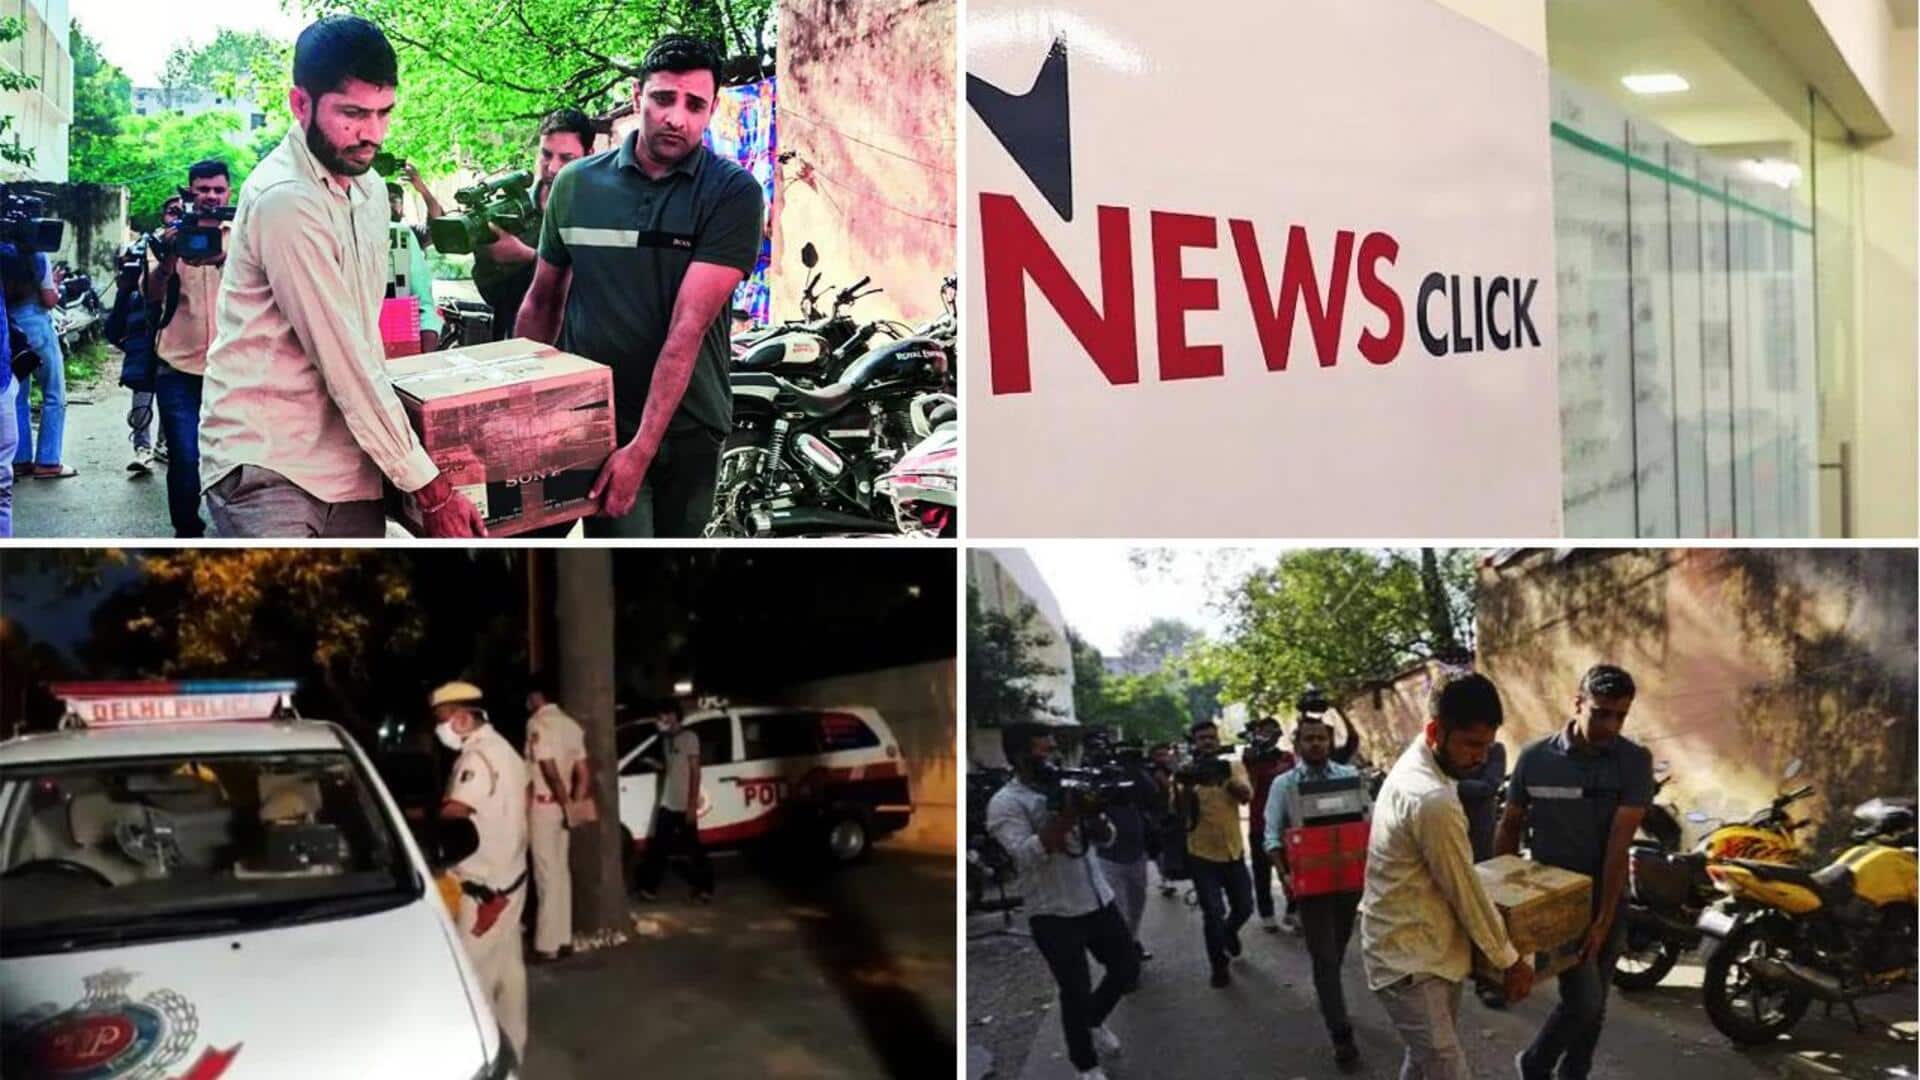 NewsClick case: Delhi Police raids Kerala residence of former employee